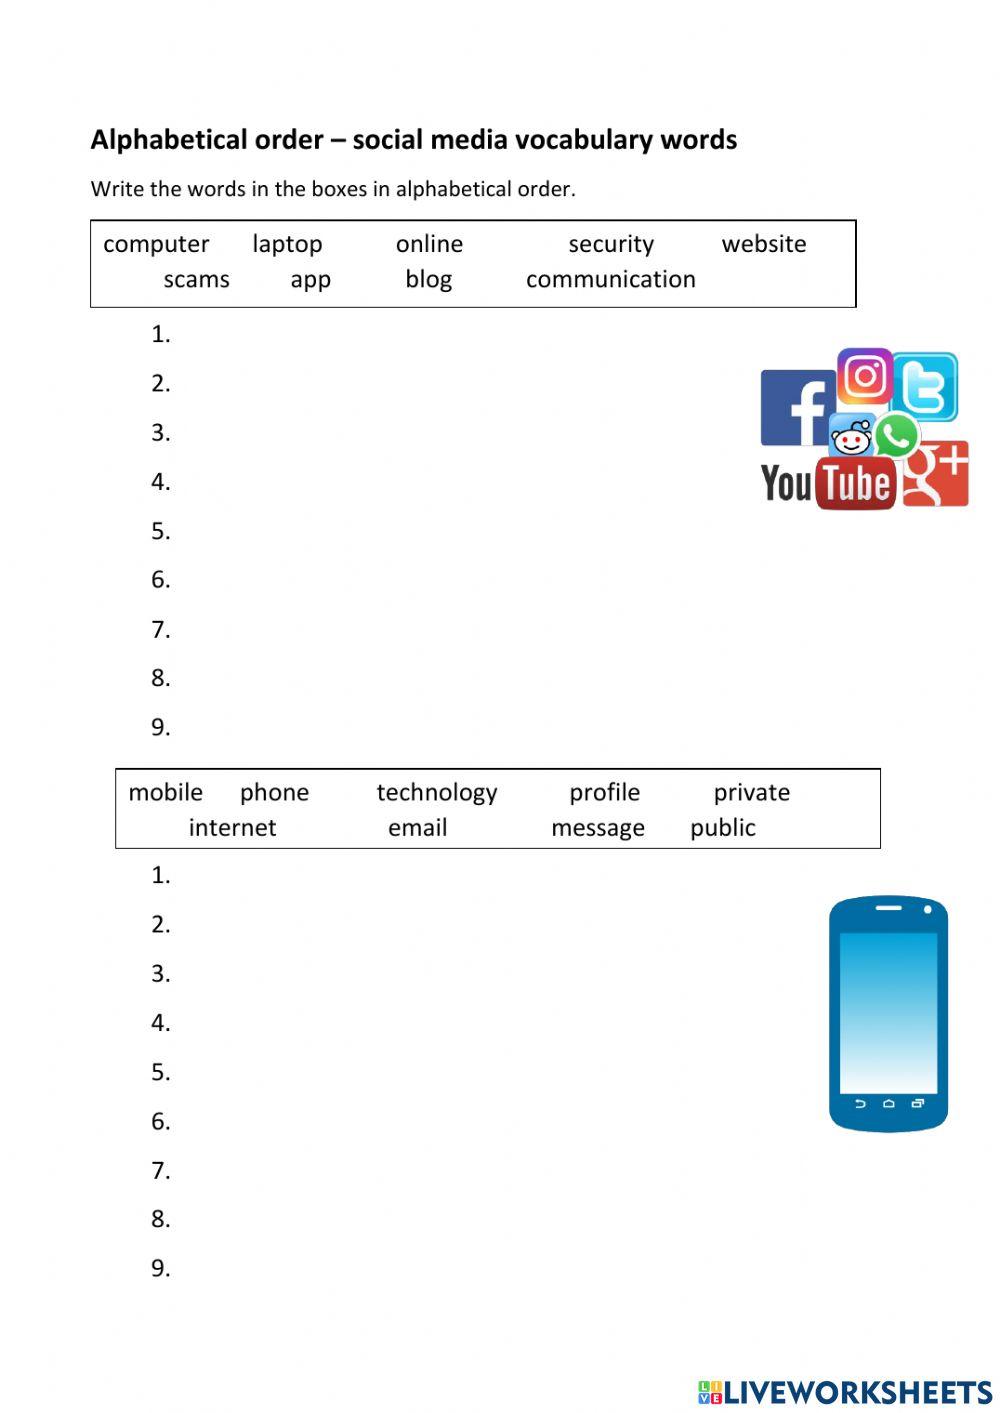 Alphabetical order - Social media words